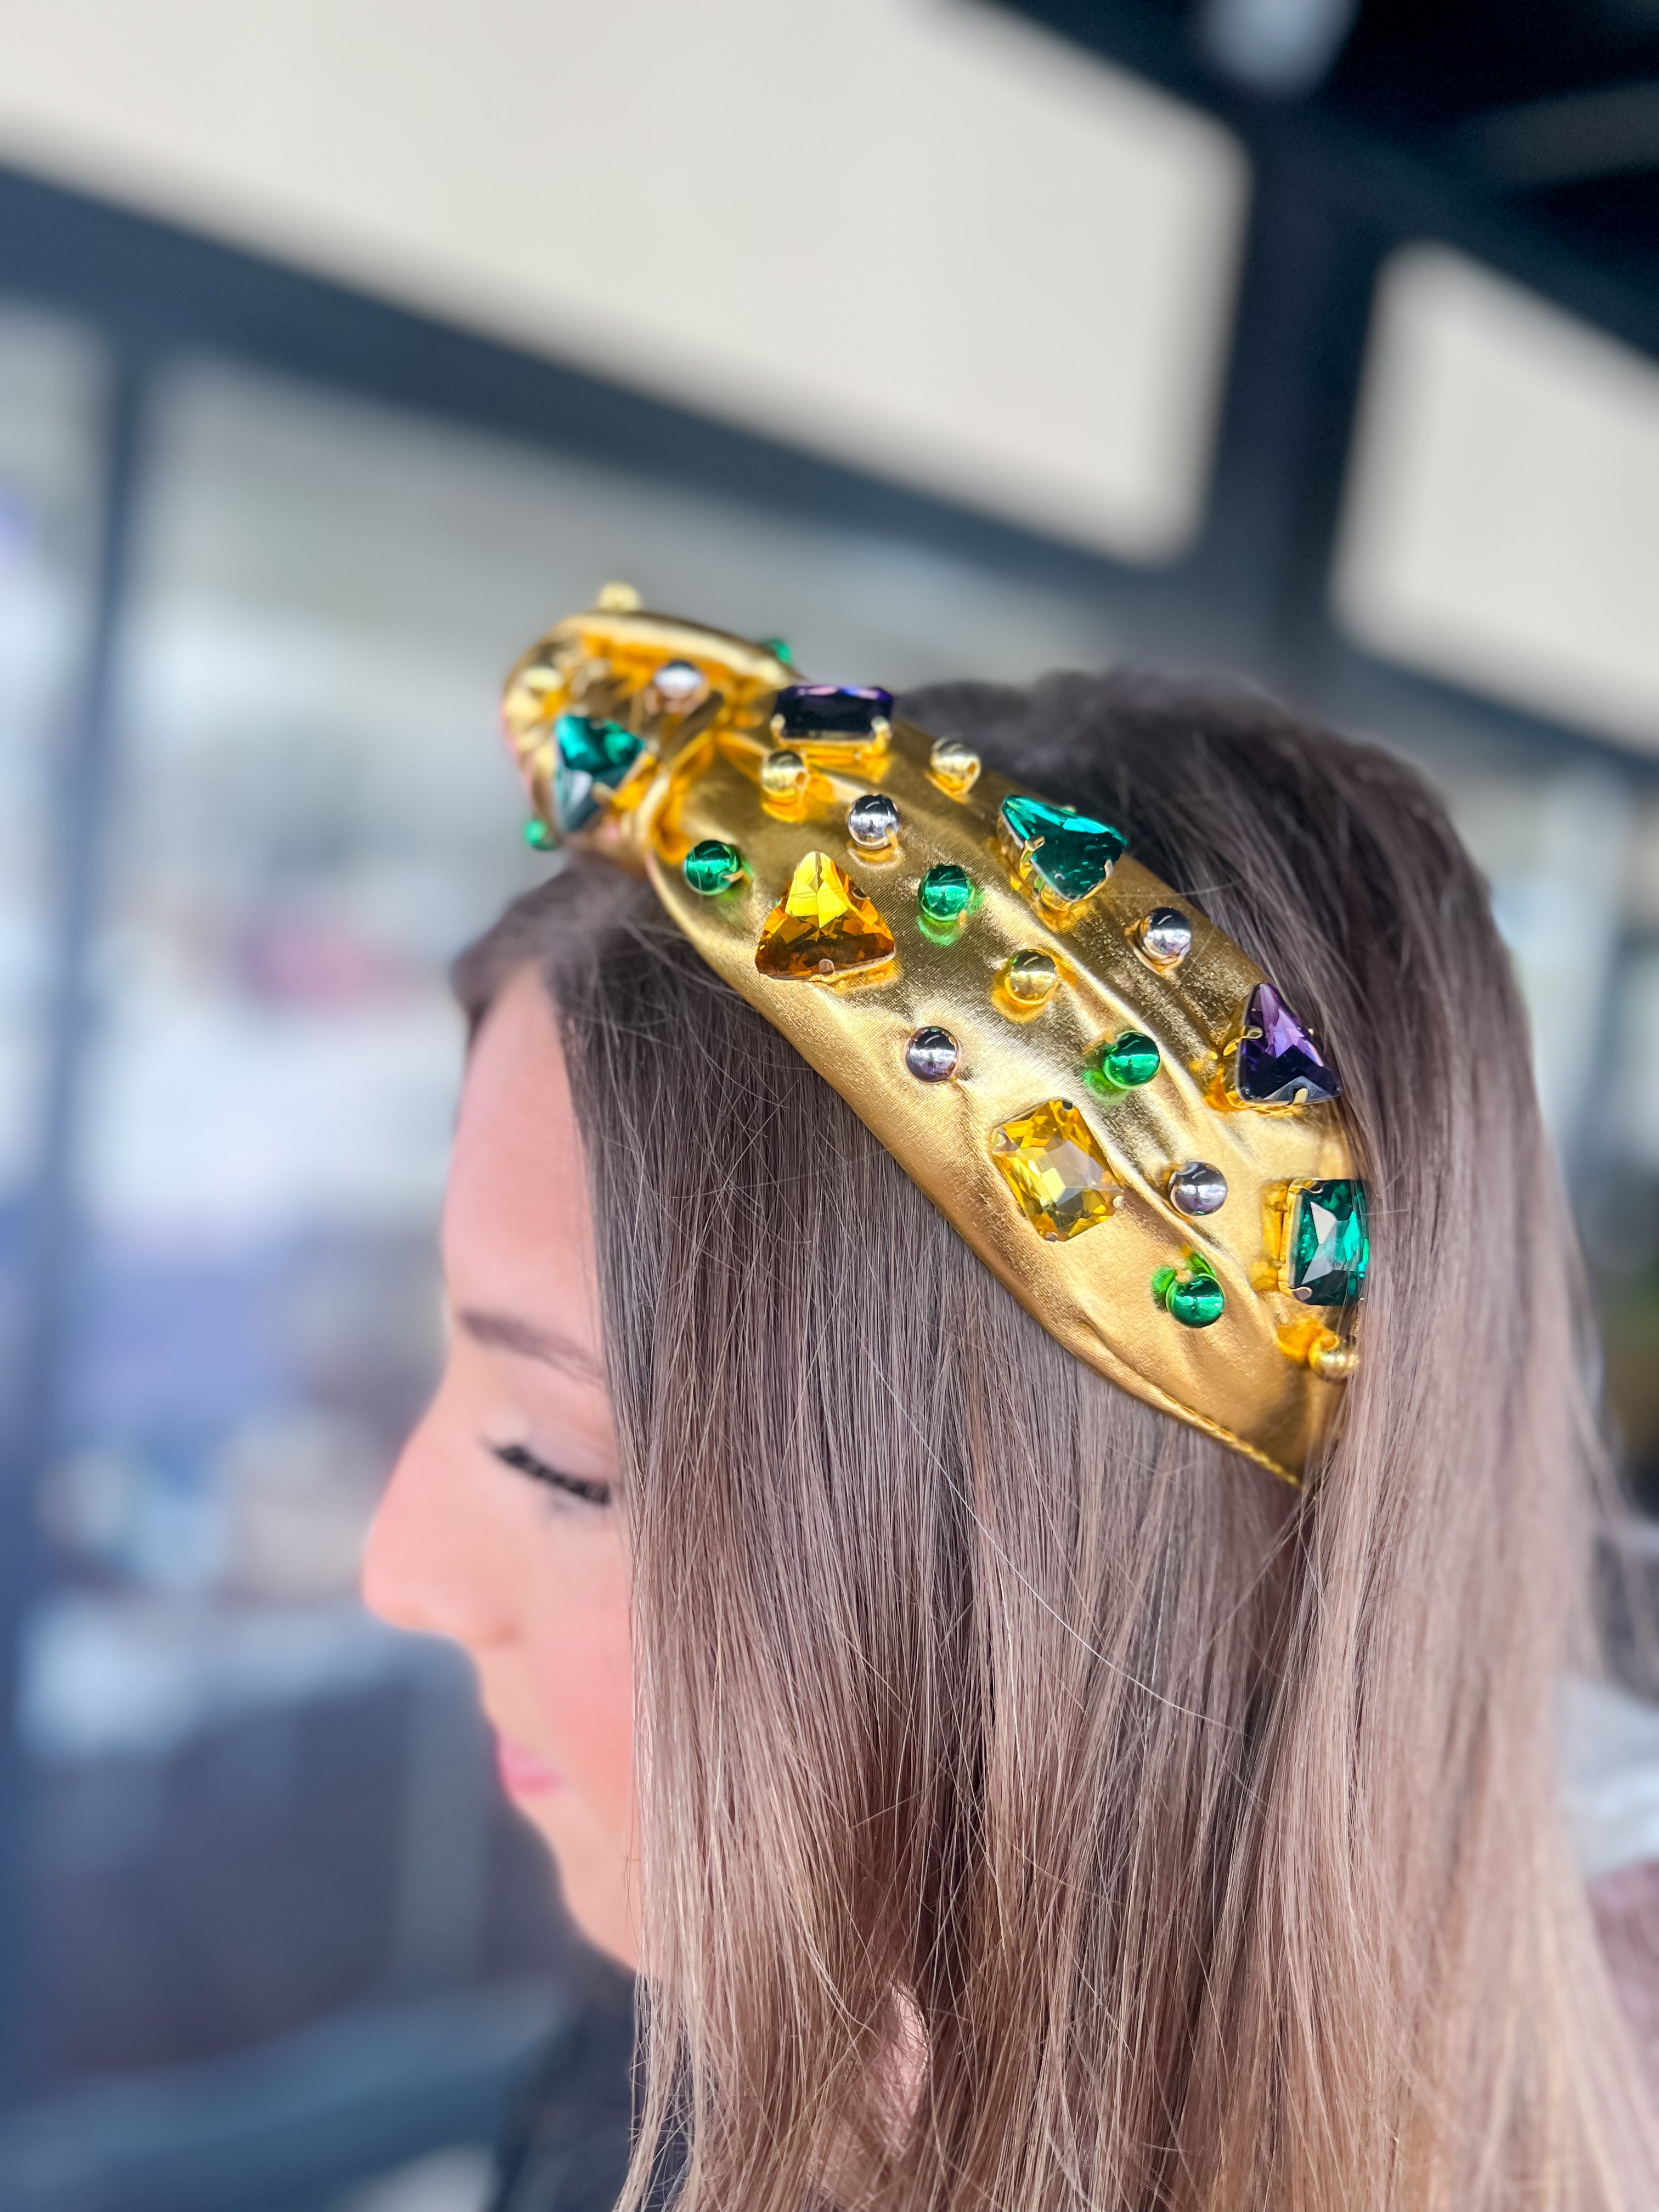 [Brianna Cannon] Gold Mardi Gras Headband-Beads and Crystals